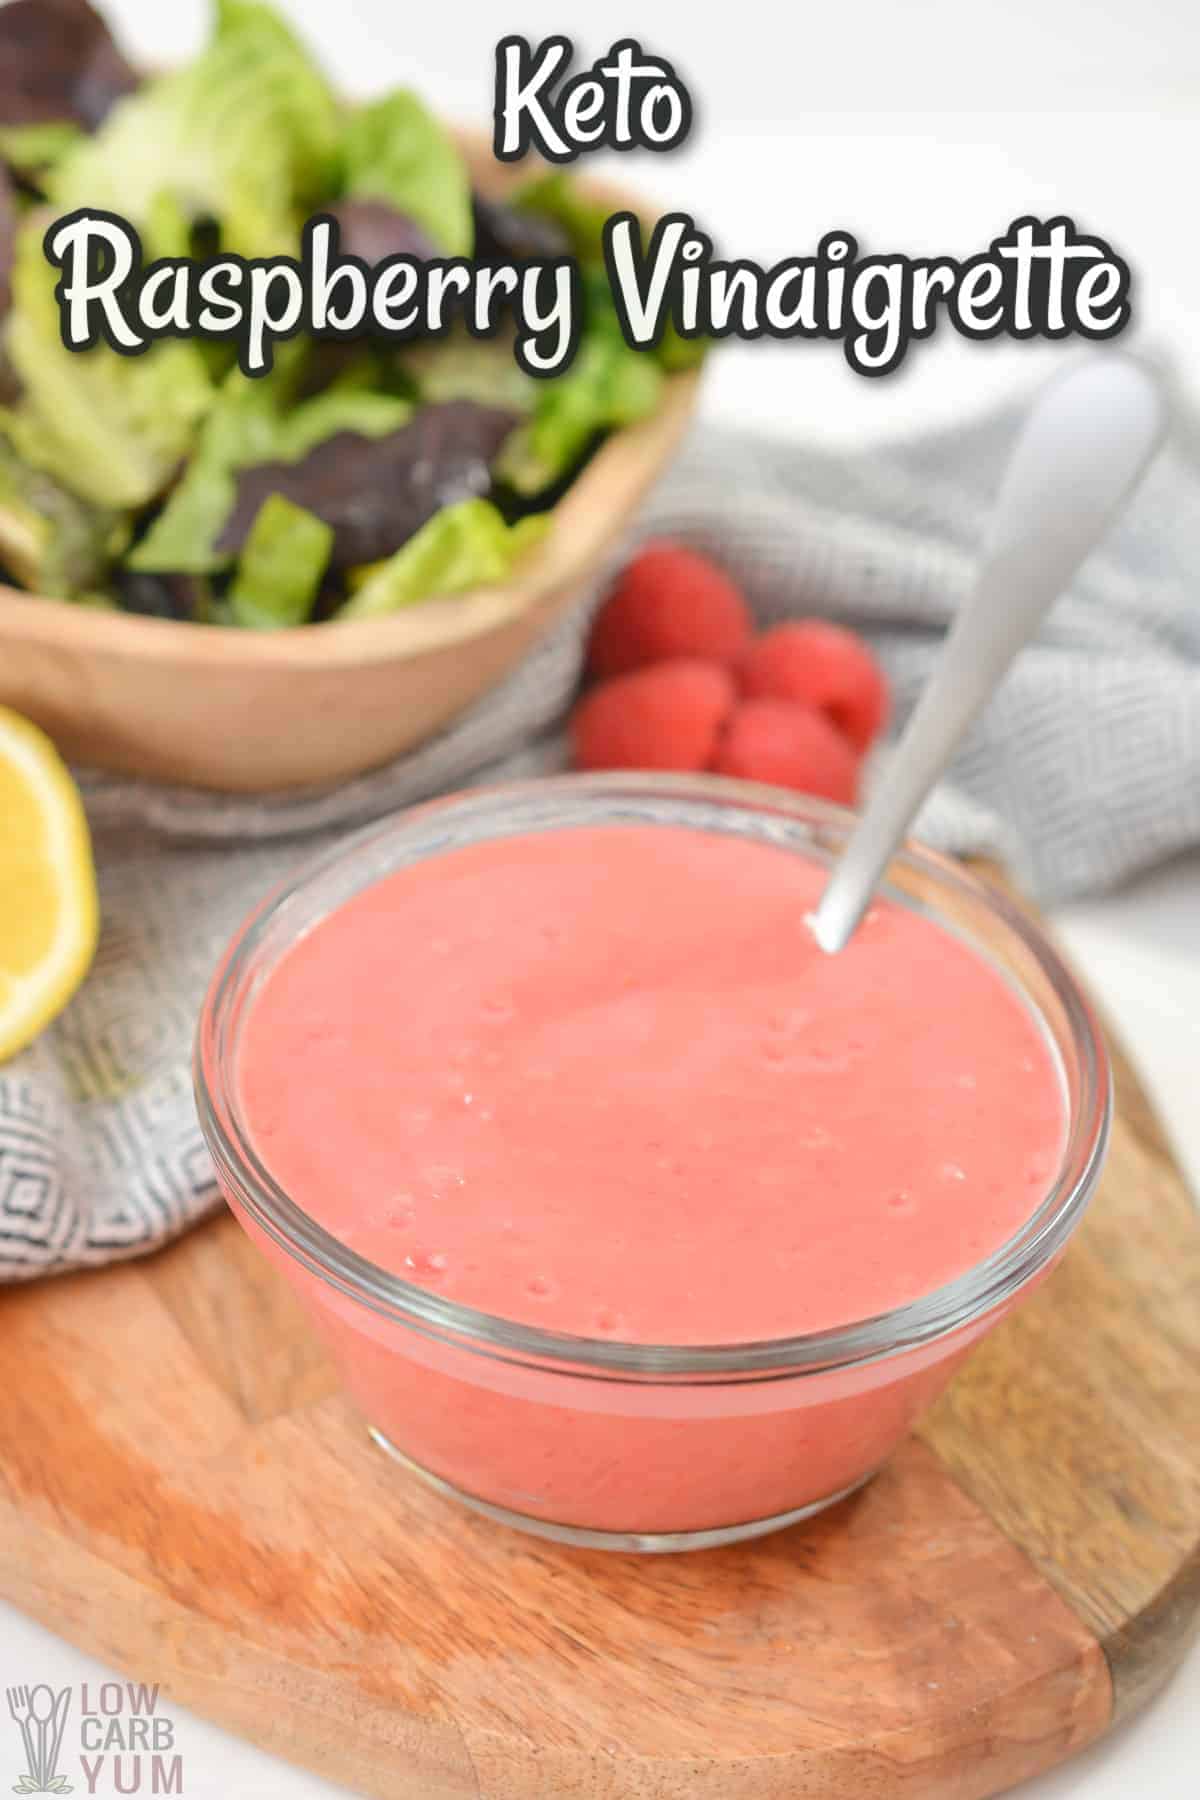 raspberry vinaigrette salad dressing recipe cover image